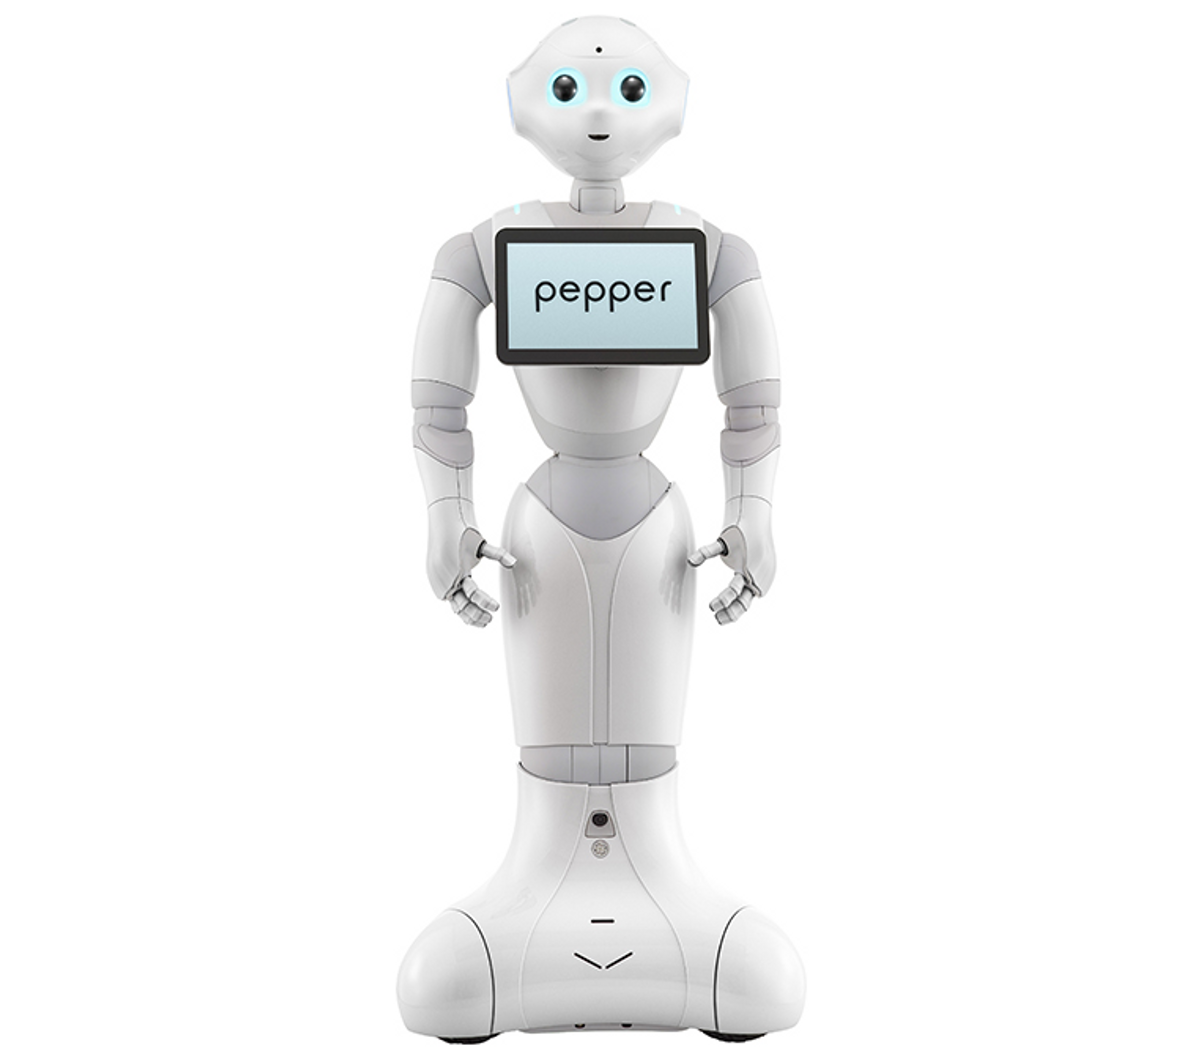 Meet Pepper, Aldebaran's New Personal Robot With an "Emotion Engine"